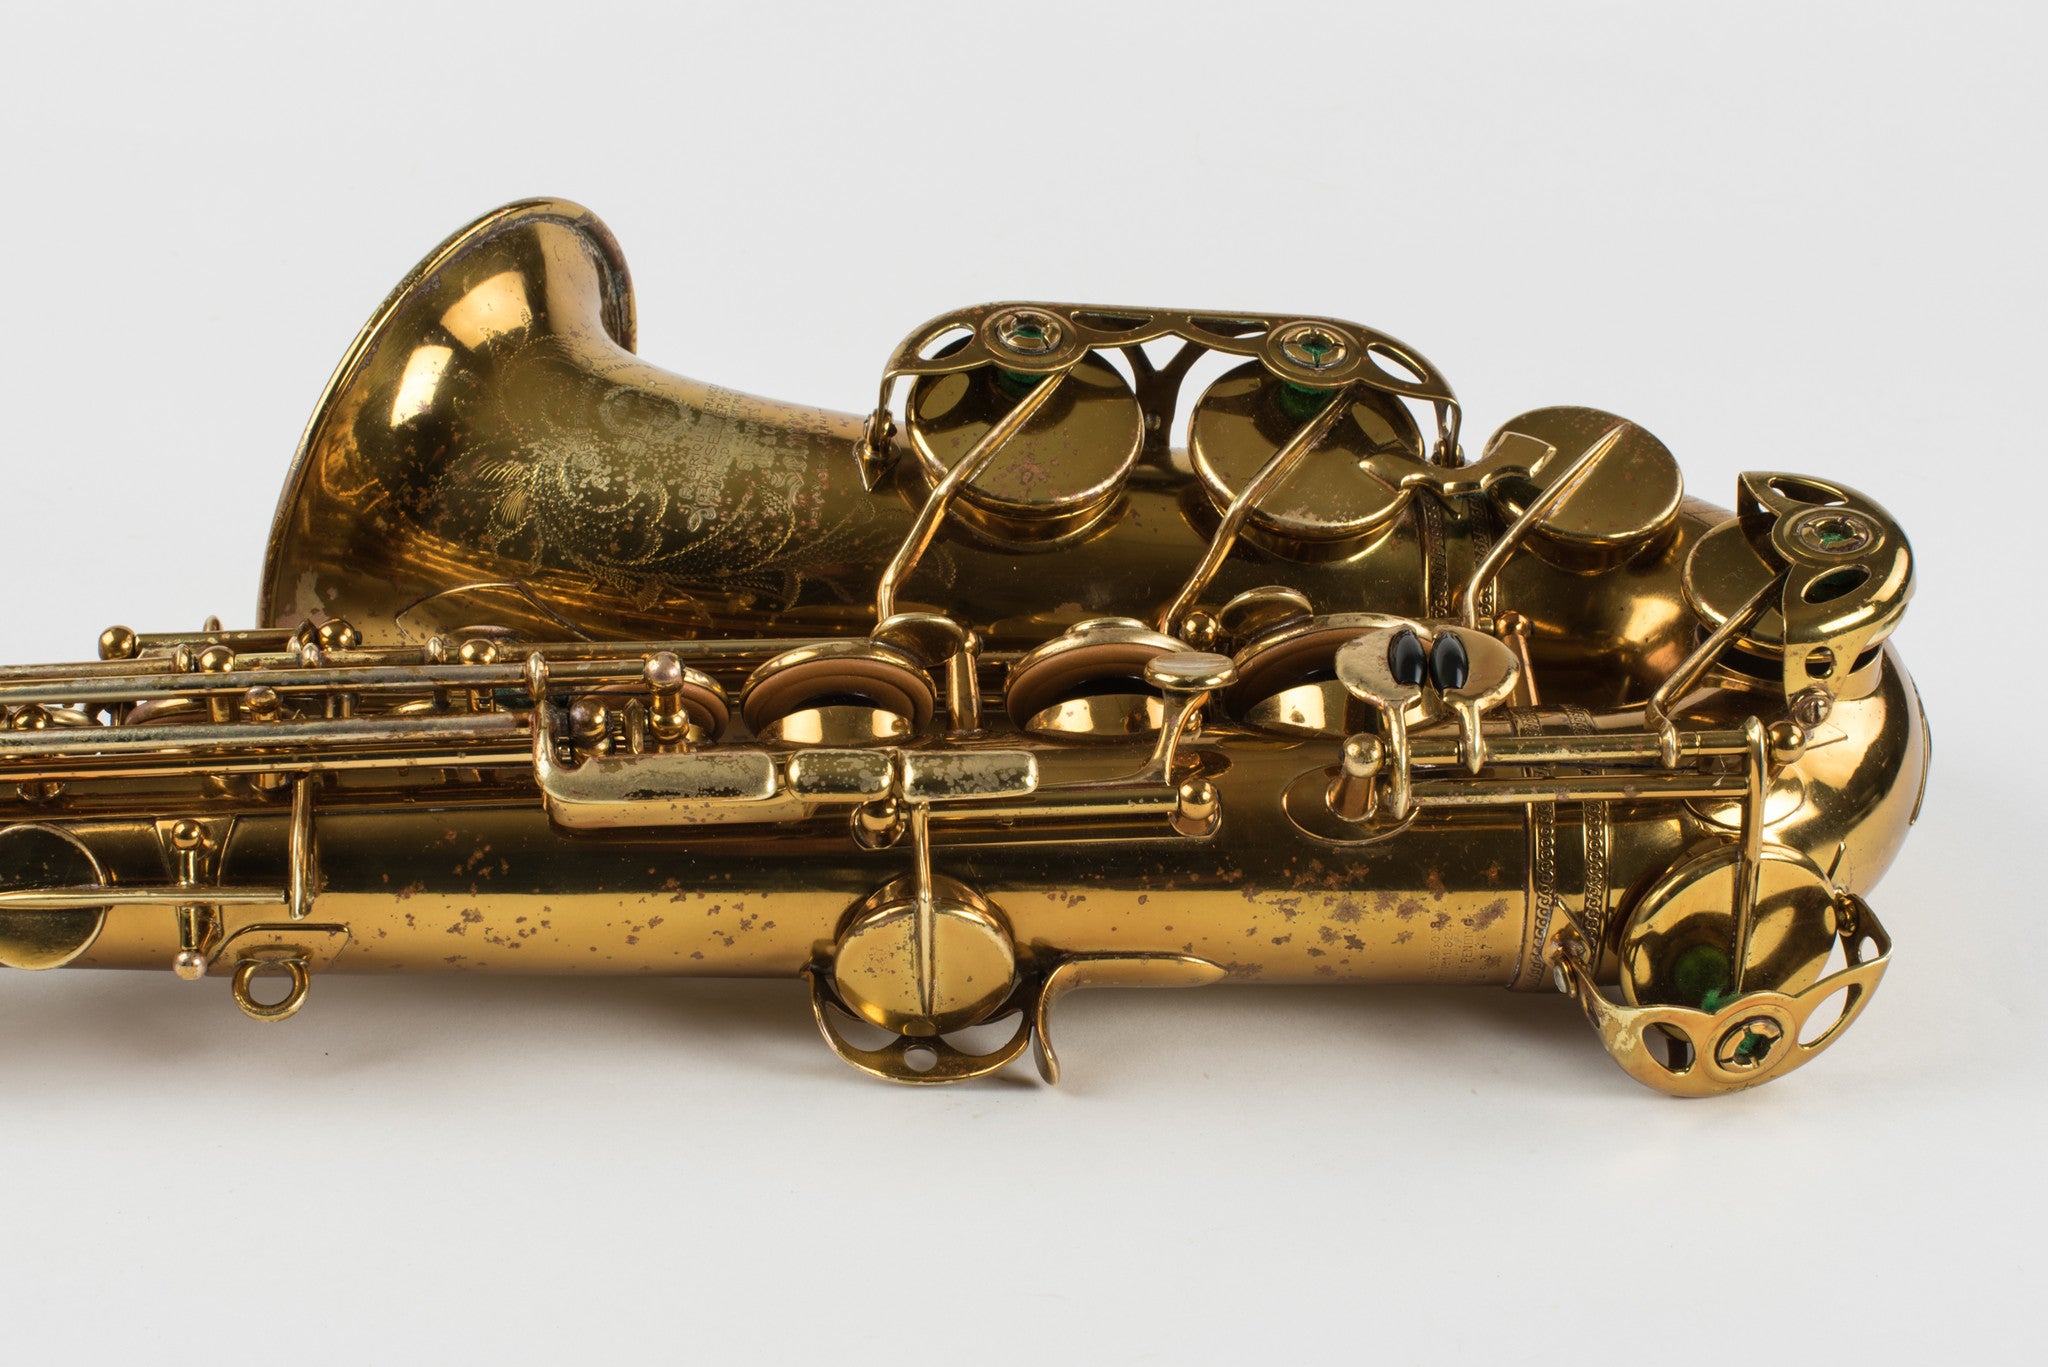 1937 Selmer Balanced Action Alto Saxophone PLUS Selmer Balanced Tone Clarinet